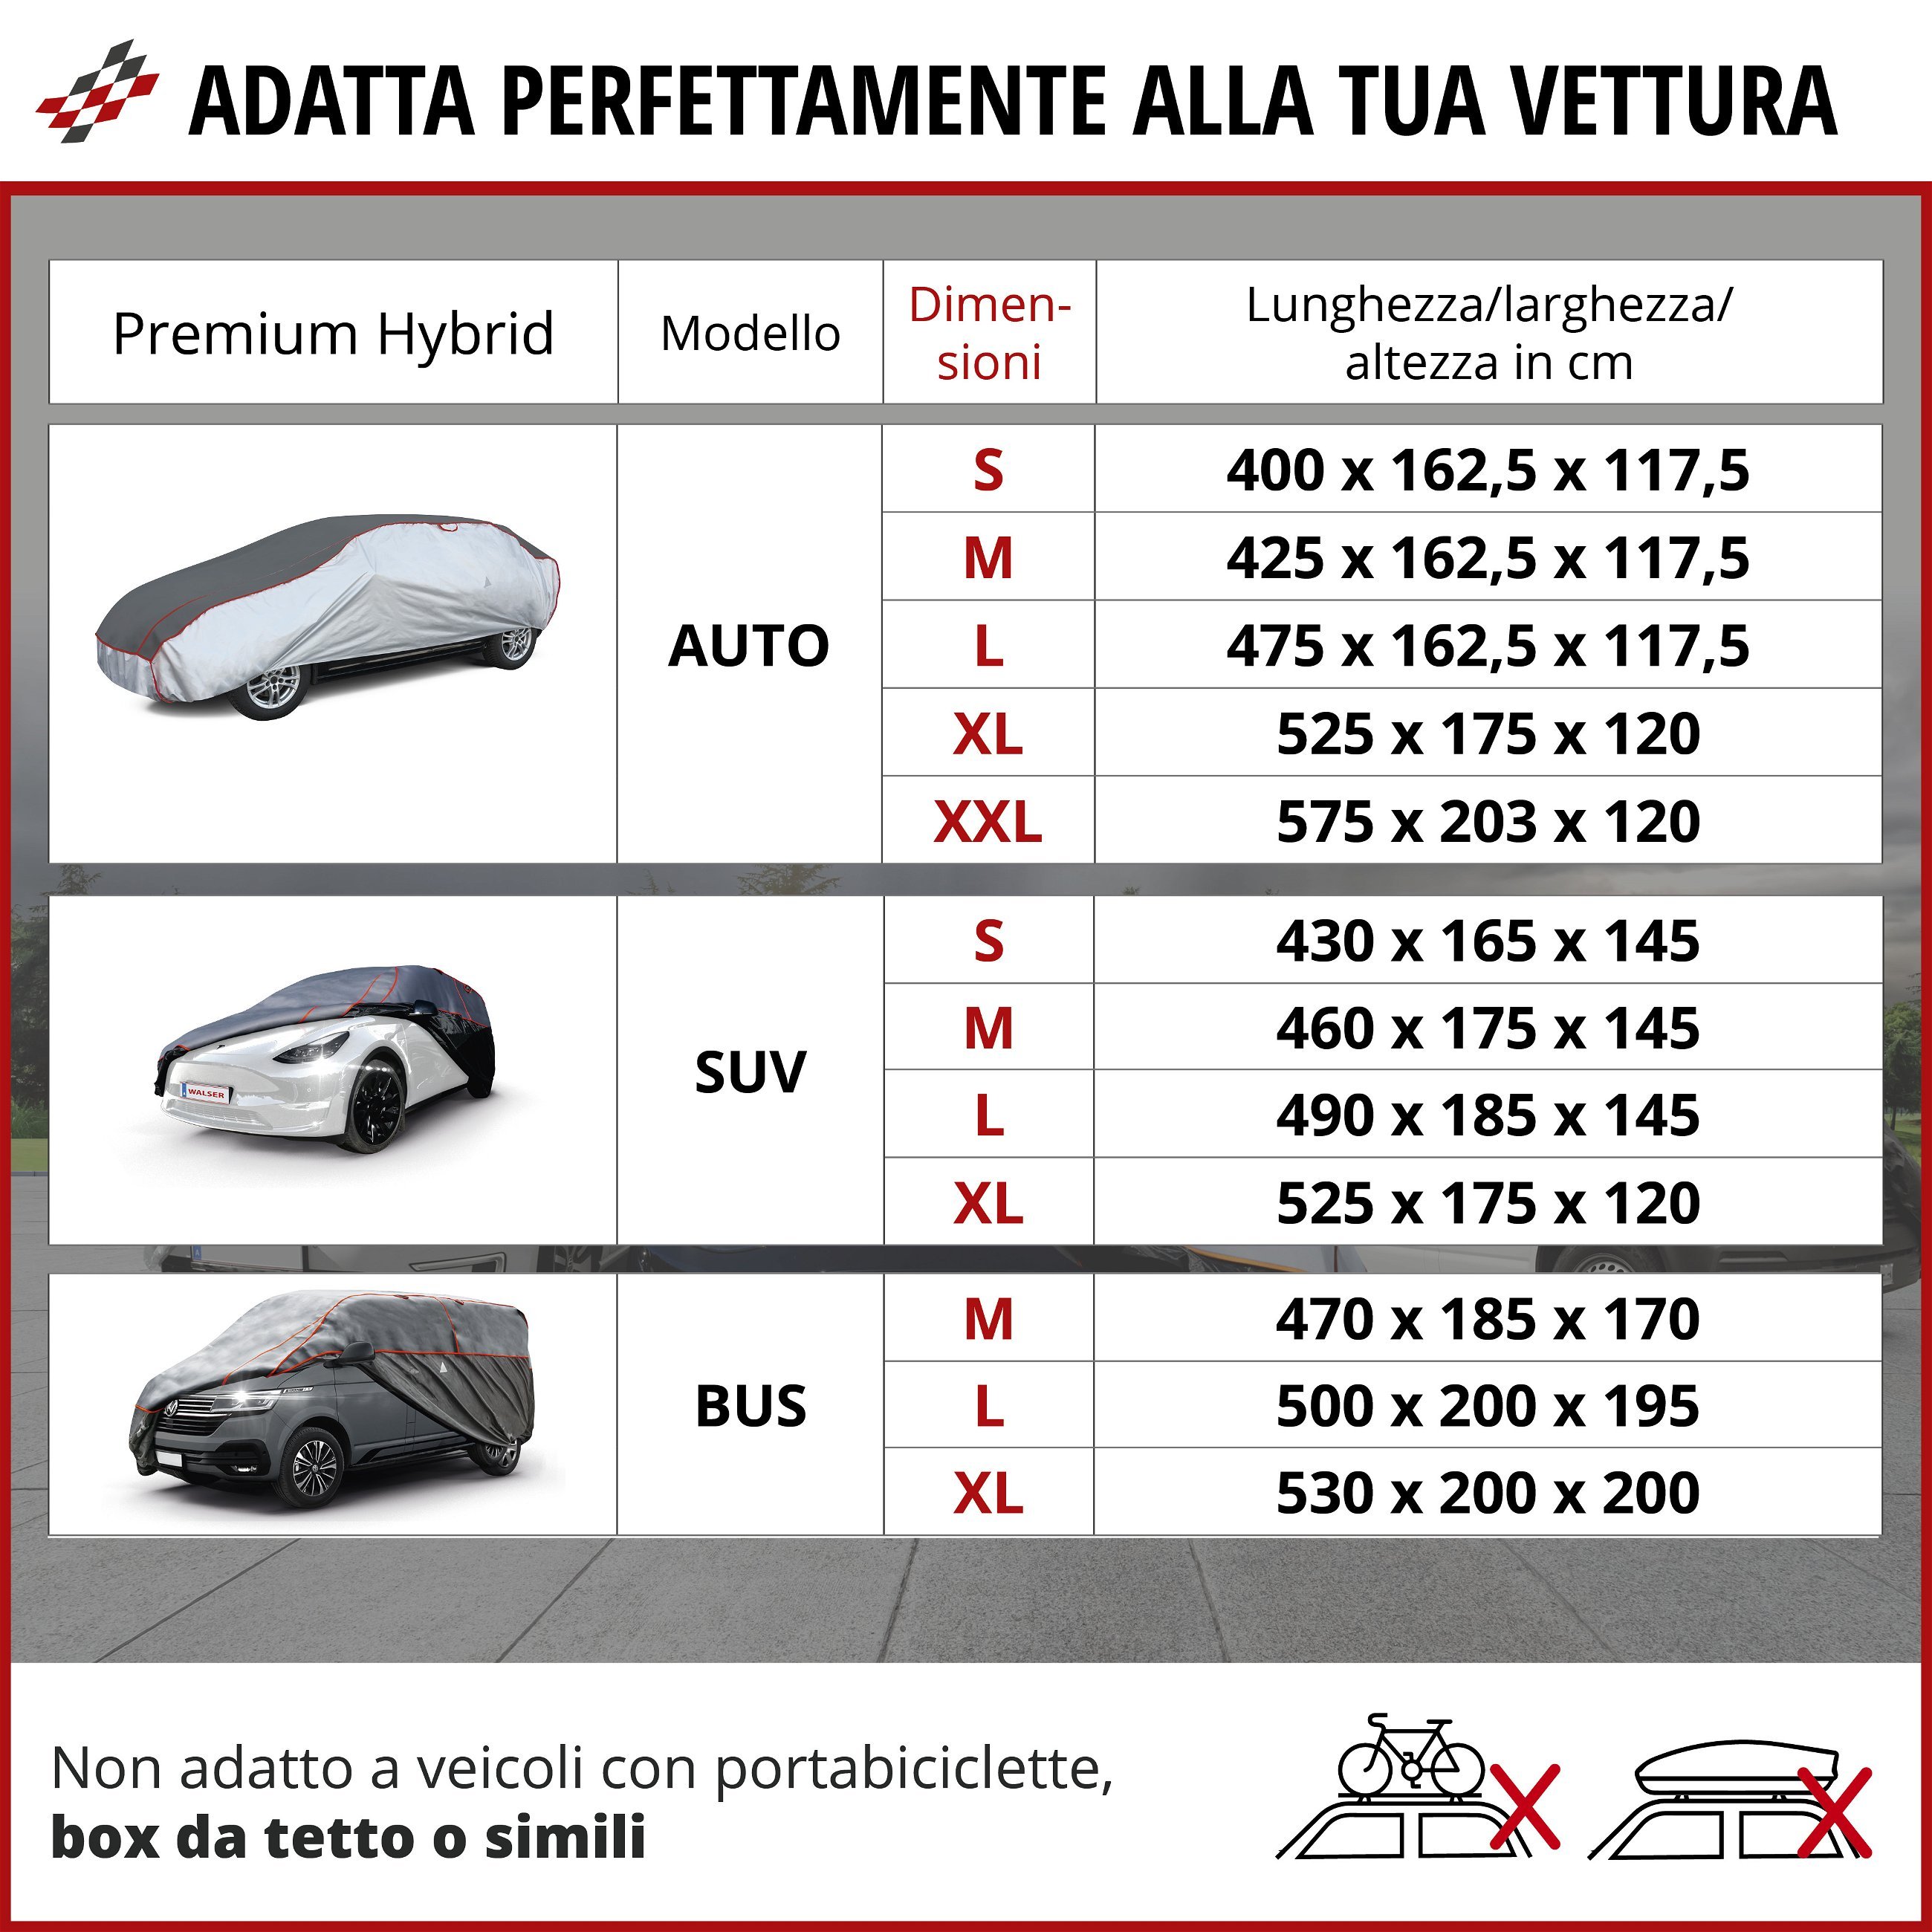 Telo Copriauto antigrandine Premium Hybrid SUV misura S